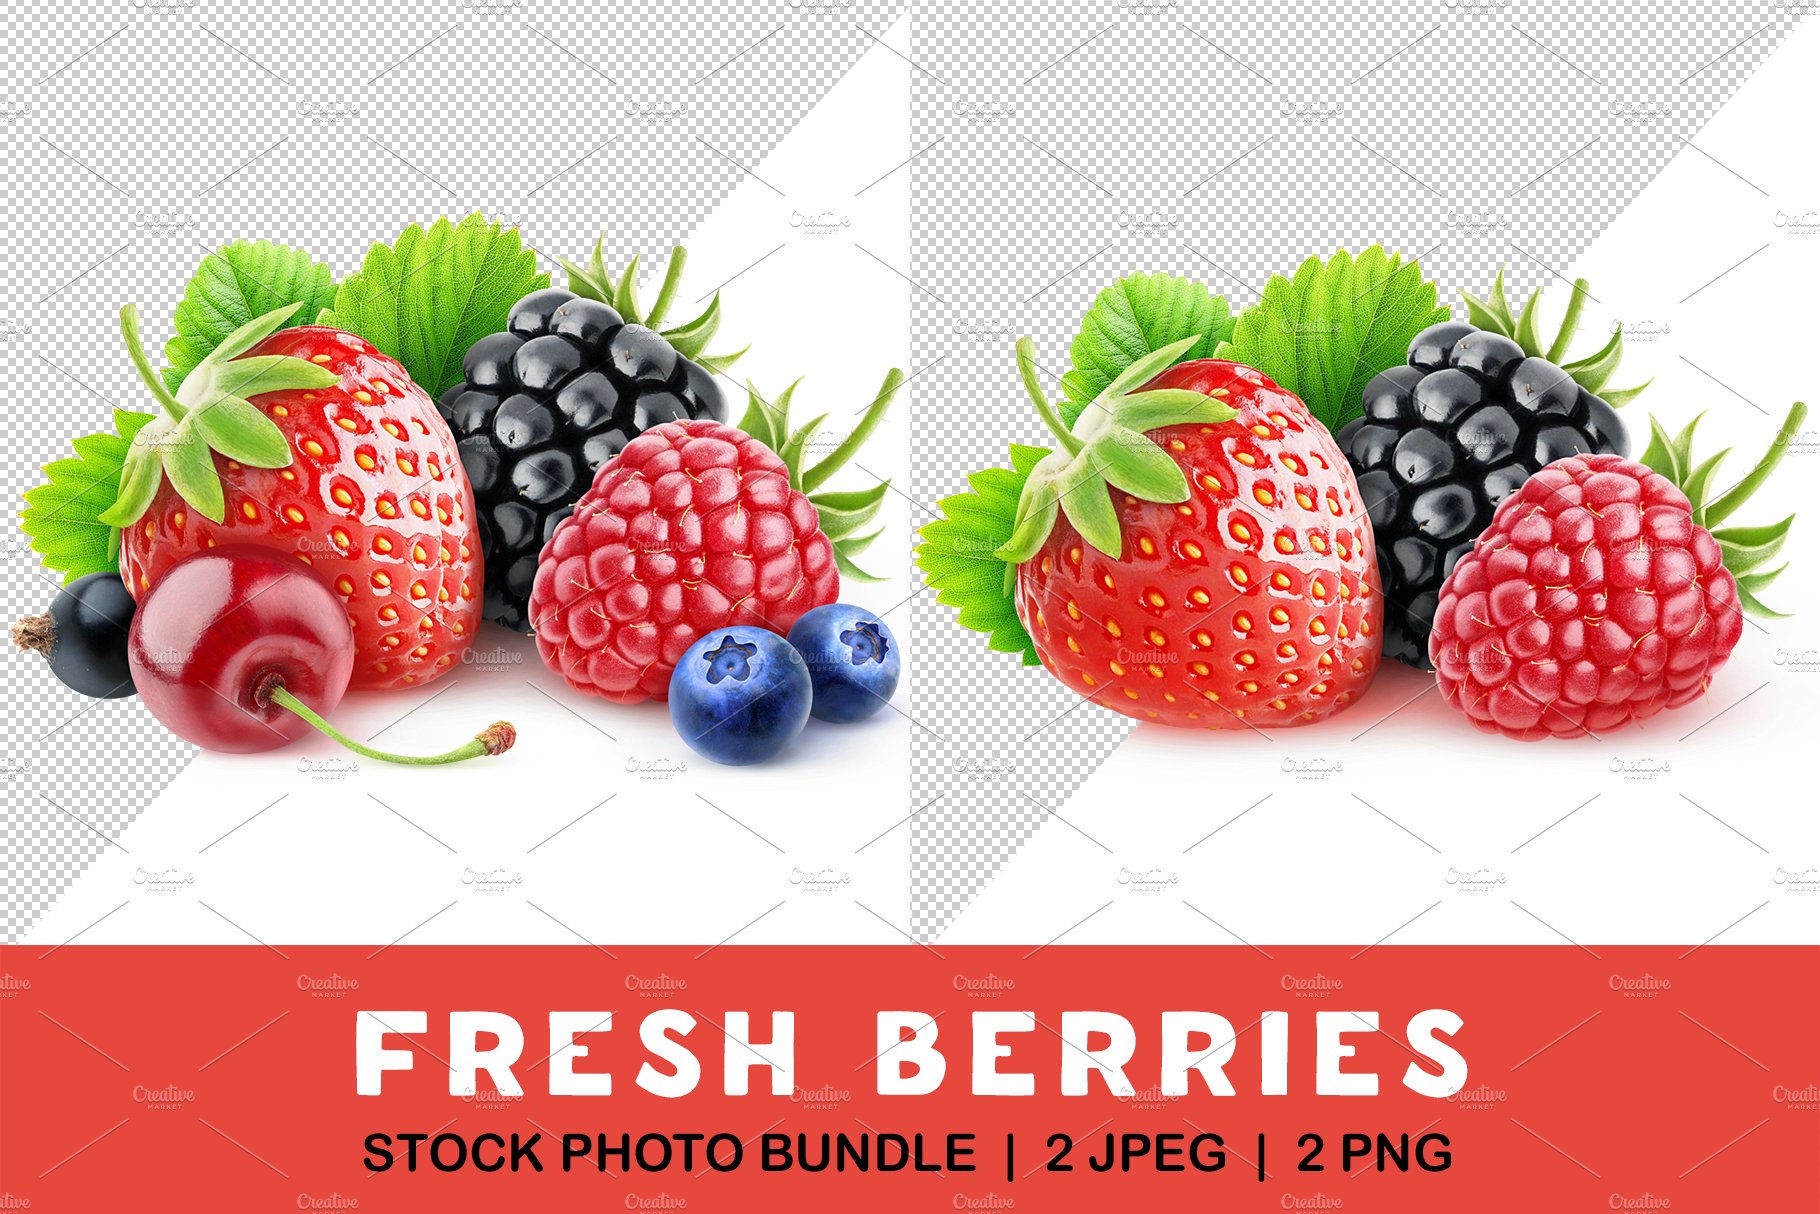 Fresh berries cover image.